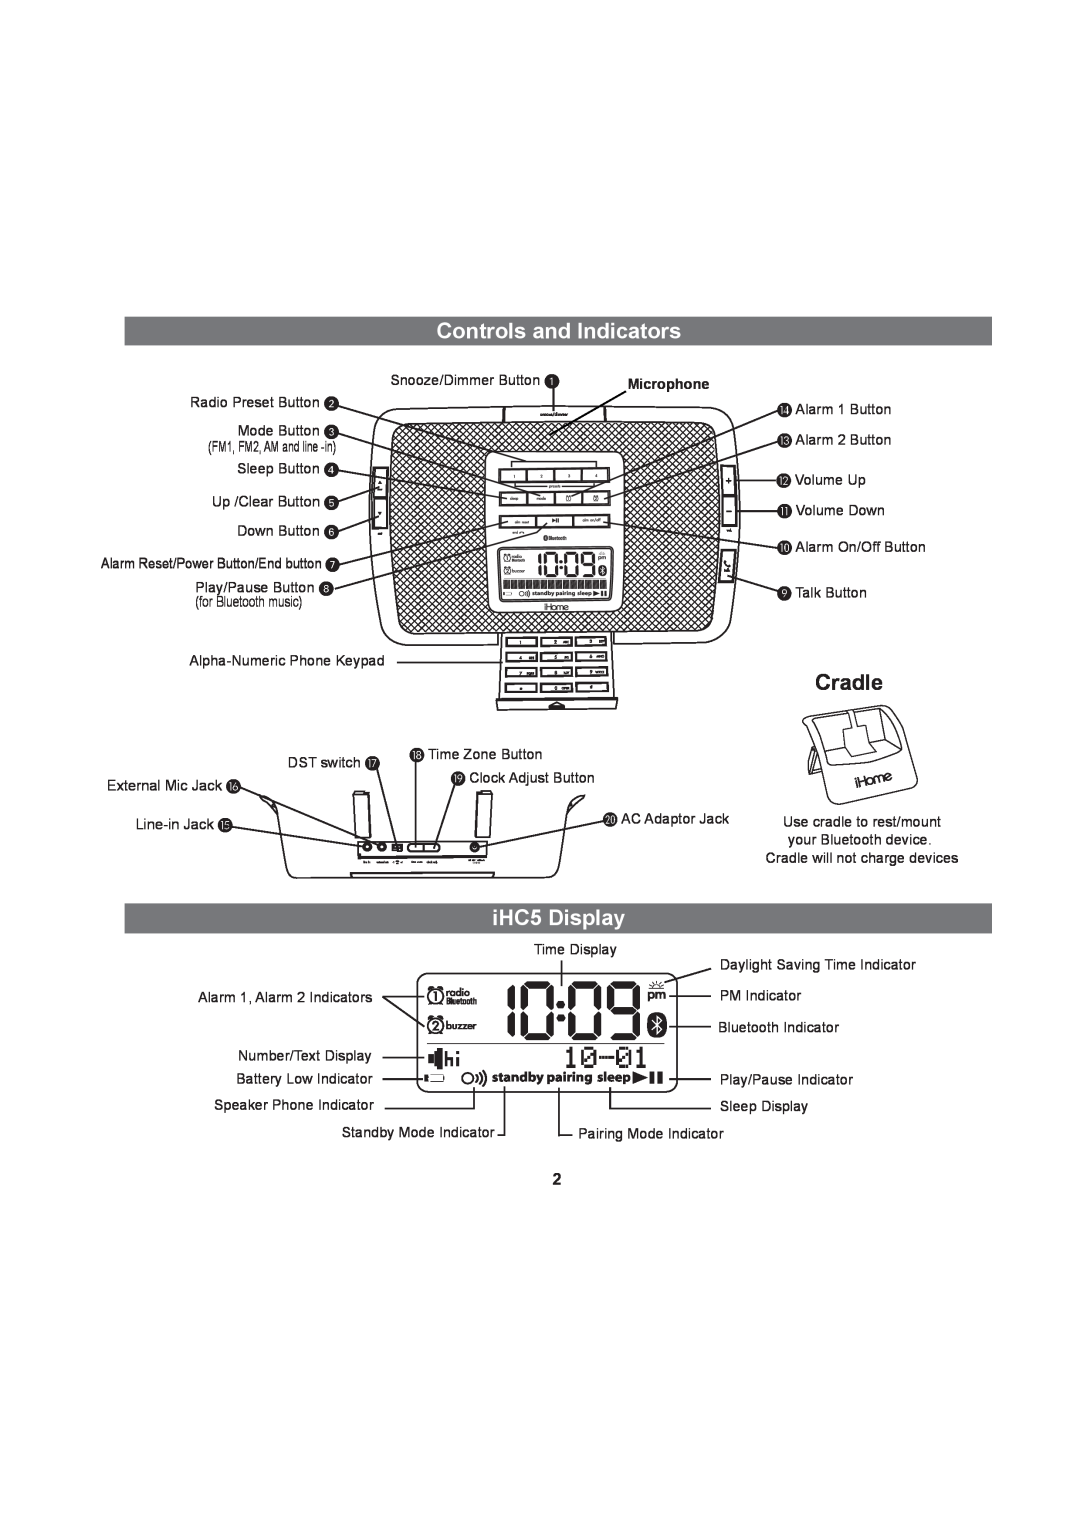 iHome manual Controls and Indicators, Cradle, iHC5 Display, Microphone 